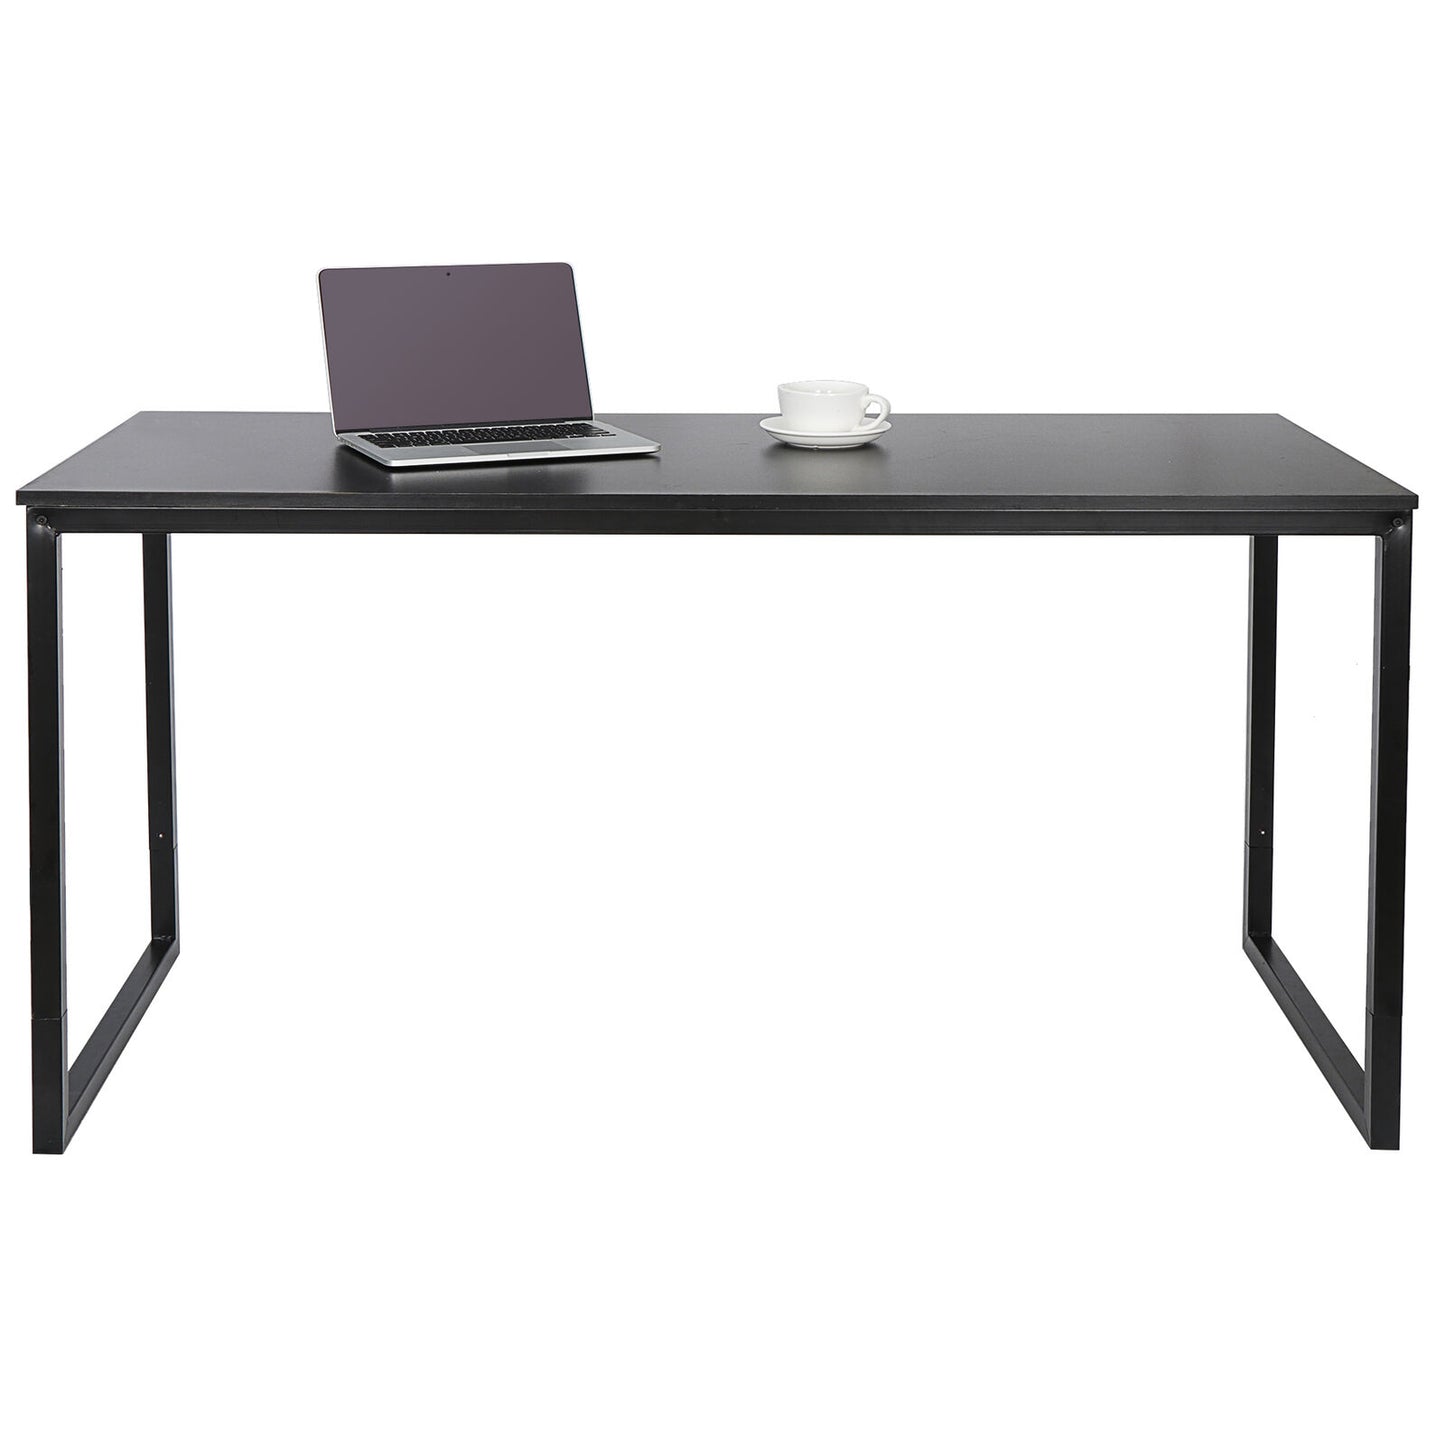 55" Computer Espresso Style Writing Desk Modern Study Office Desk Corner Table